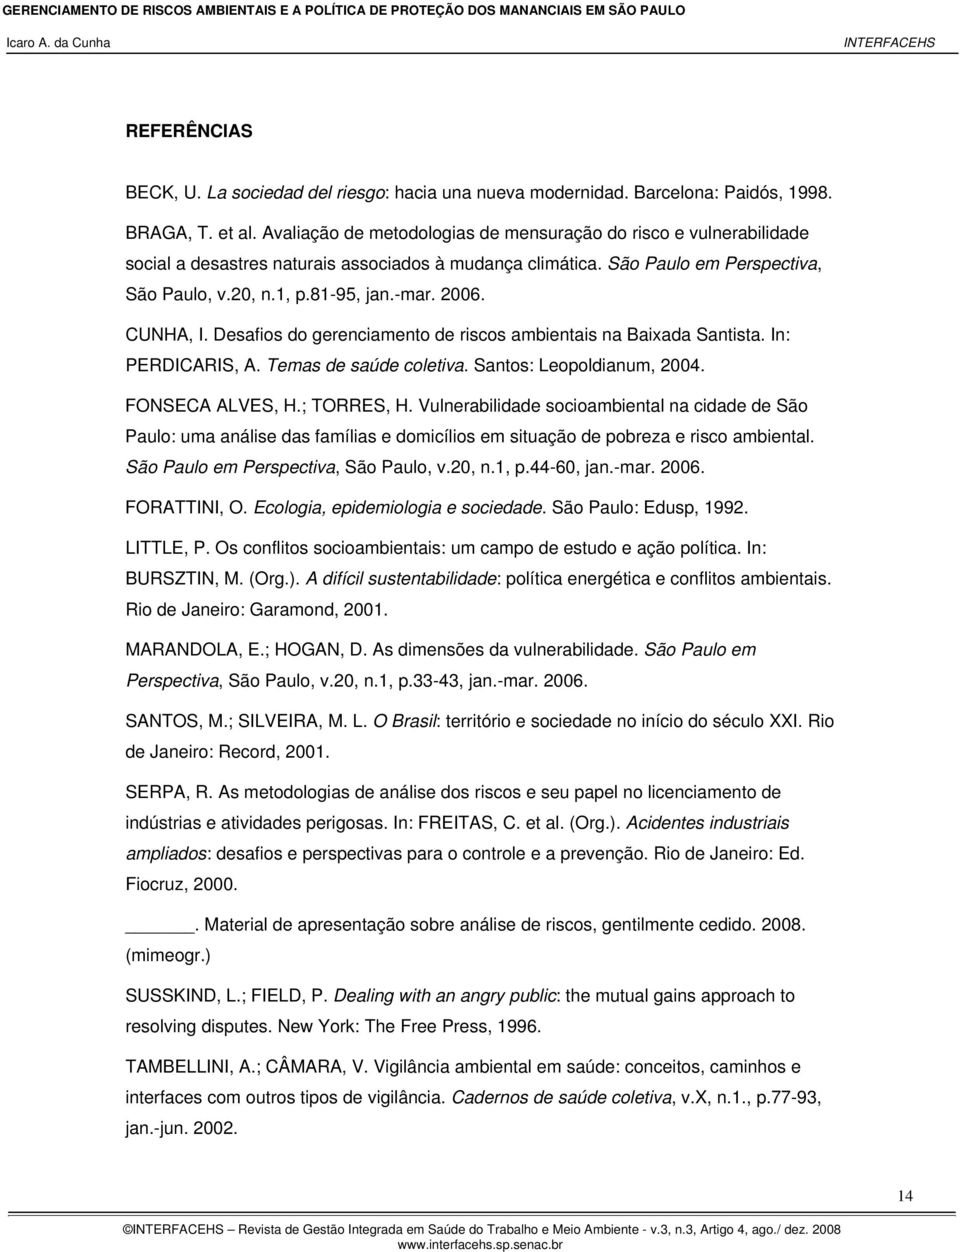 CUNHA, I. Desafios do gerenciamento de riscos ambientais na Baixada Santista. In: PERDICARIS, A. Temas de saúde coletiva. Santos: Leopoldianum, 2004. FONSECA ALVES, H.; TORRES, H.